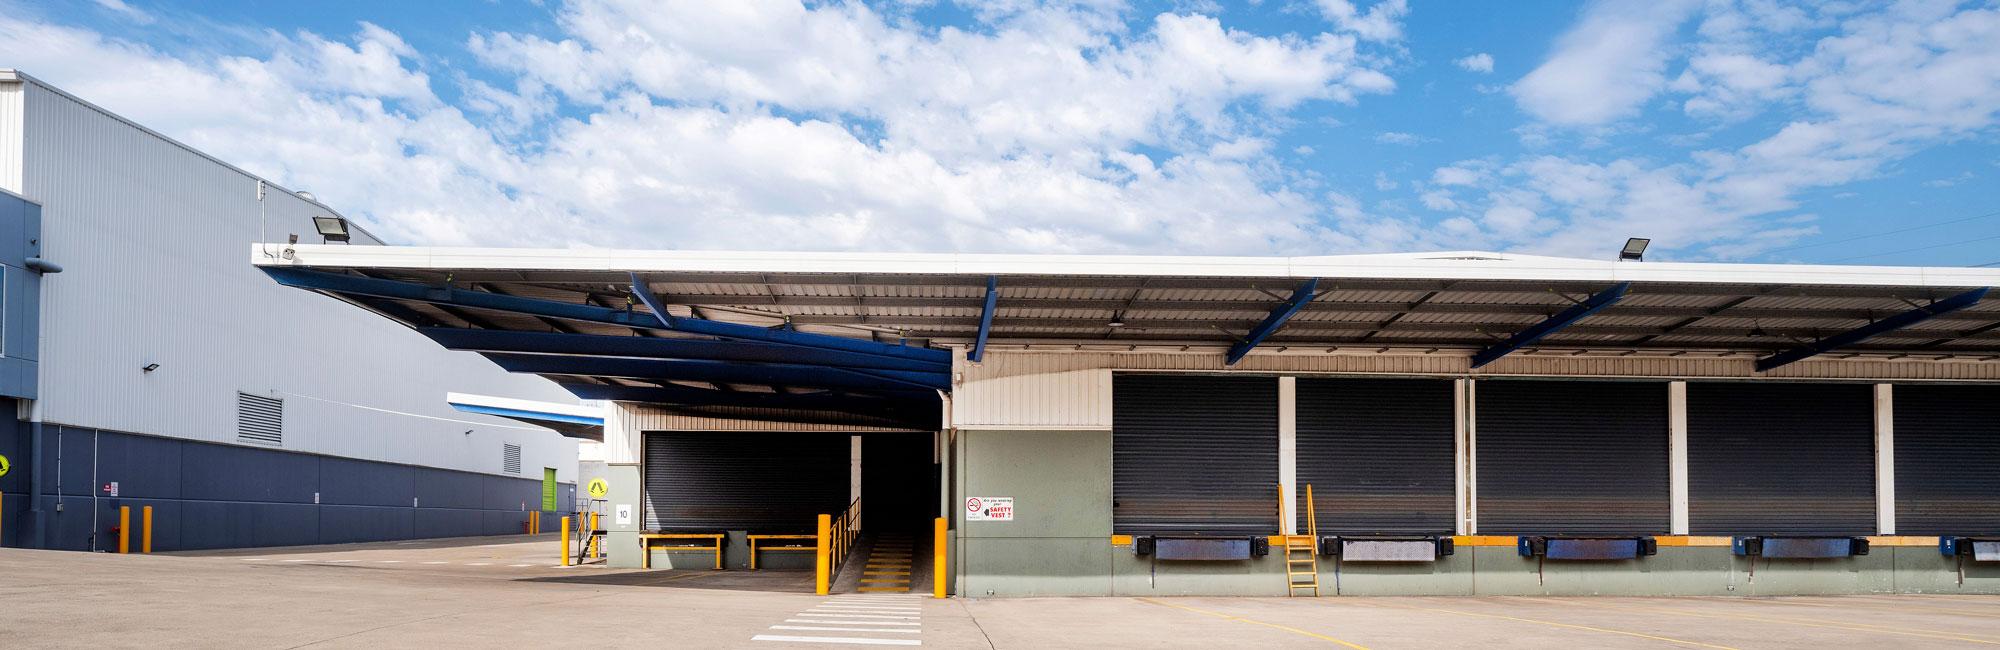 Reserve Industrial Estate - Ermington warehouse space